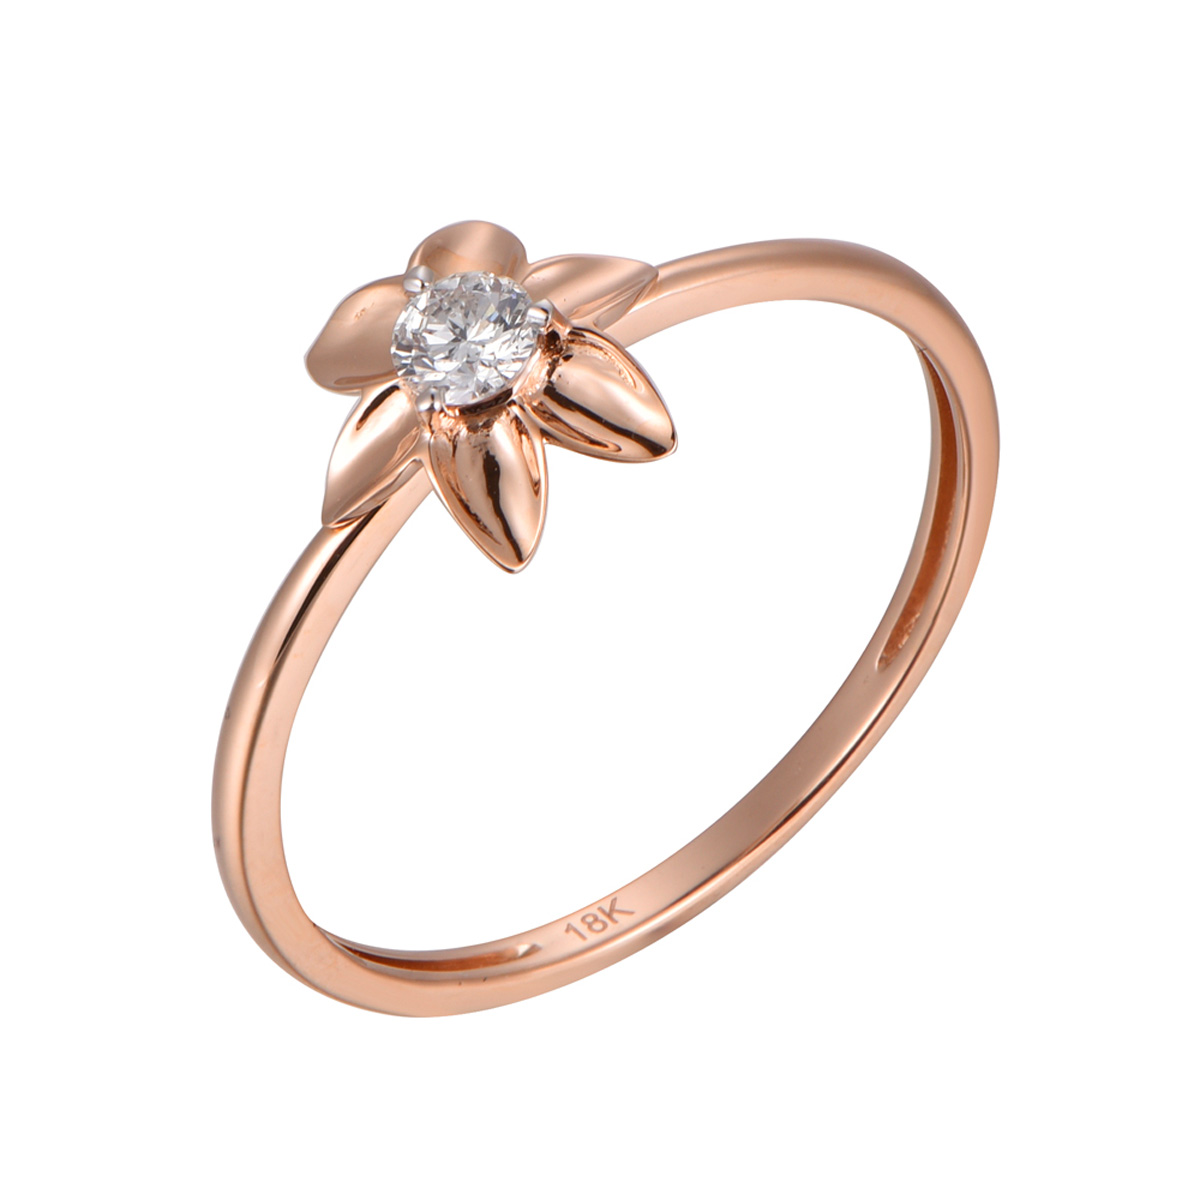 DI42514Q 18K rose gold diamond ring